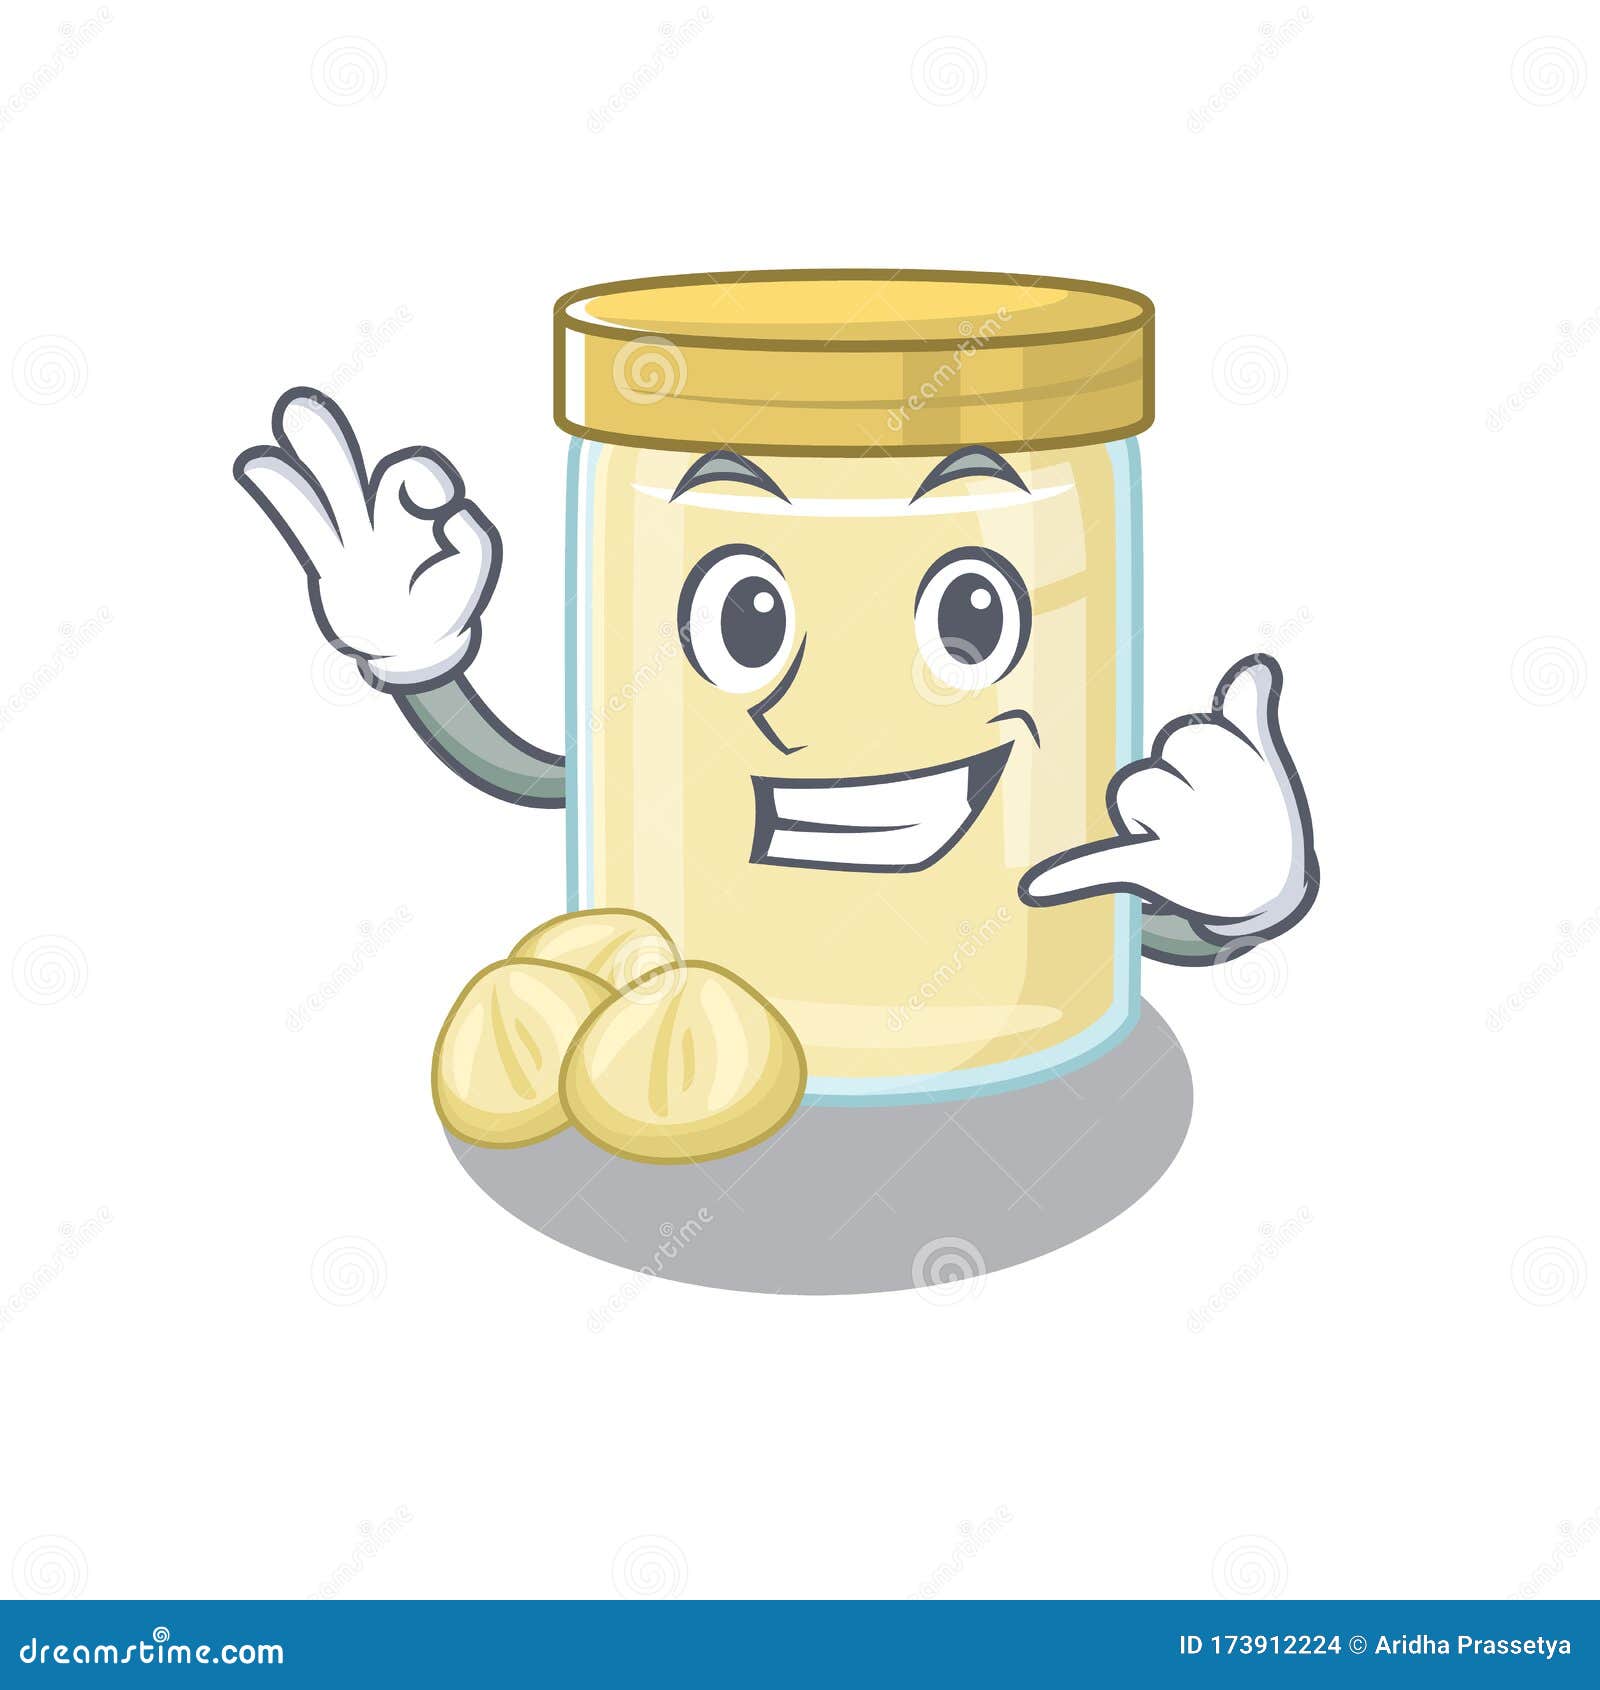 Call Me Funny Macadamia Nut Butter Cartoon Character Concept Stock Vector -  Illustration of pistachio, emoticon: 173912224